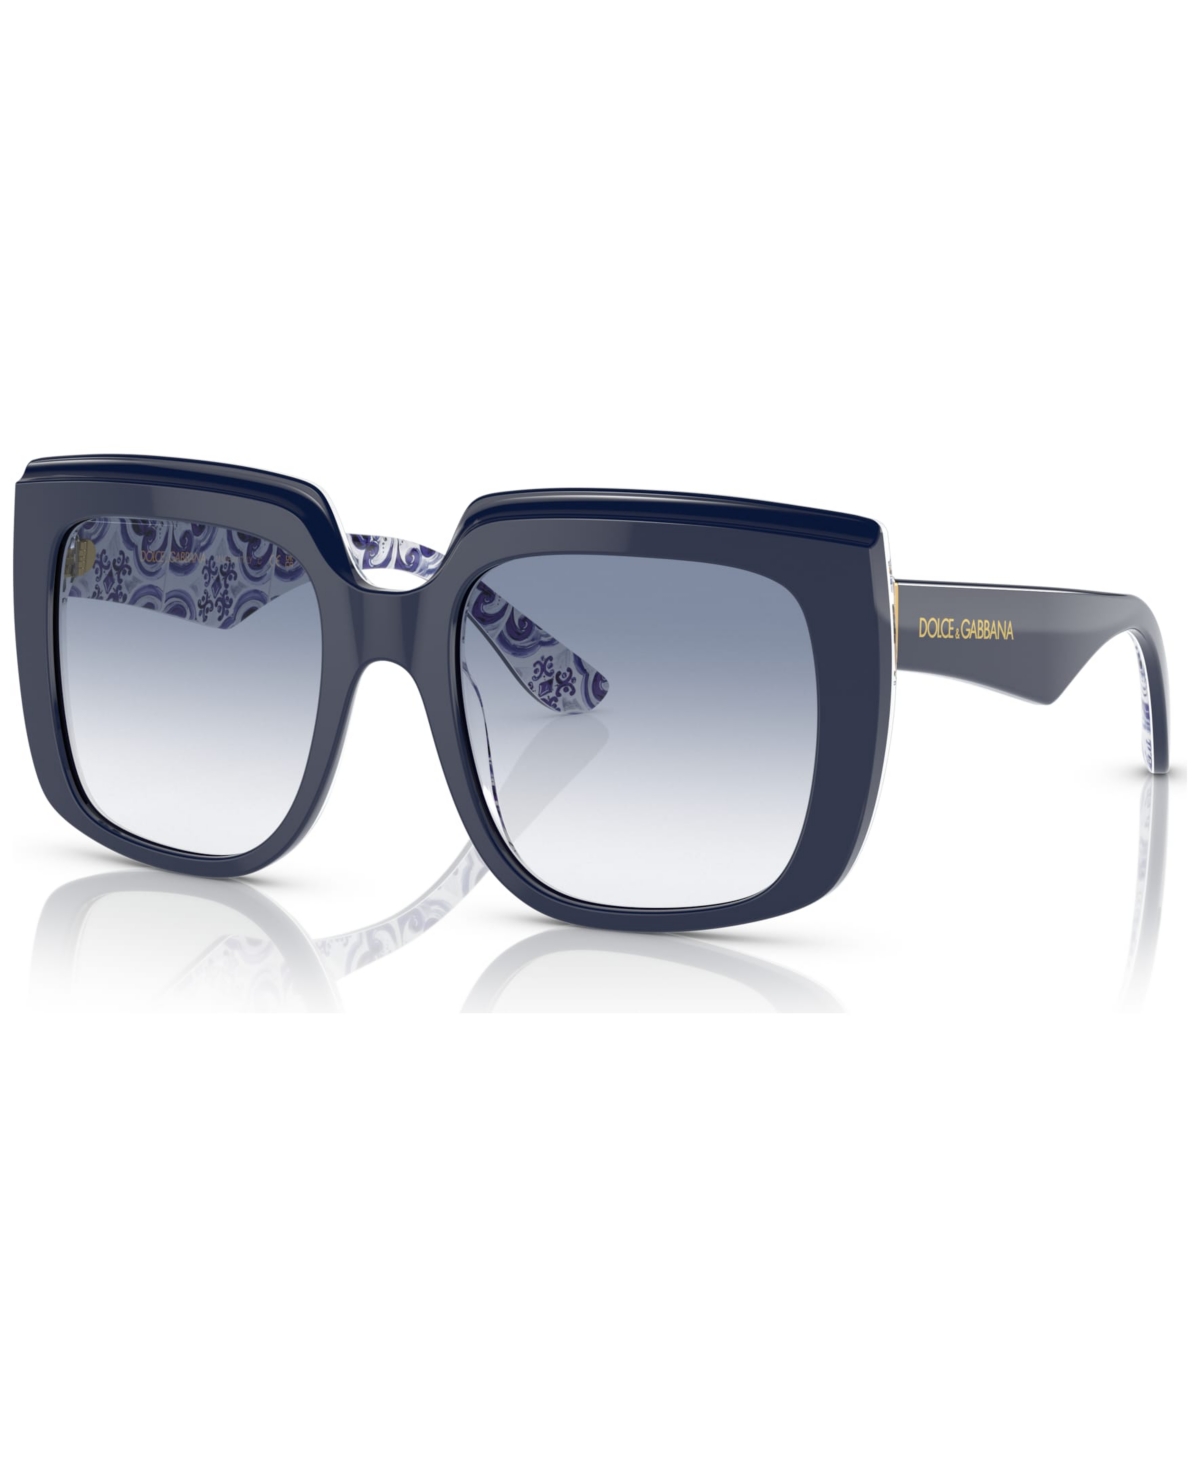 Dolce&Gabbana Women's Sunglasses, DG4414 - Blue on Blue Maiolica